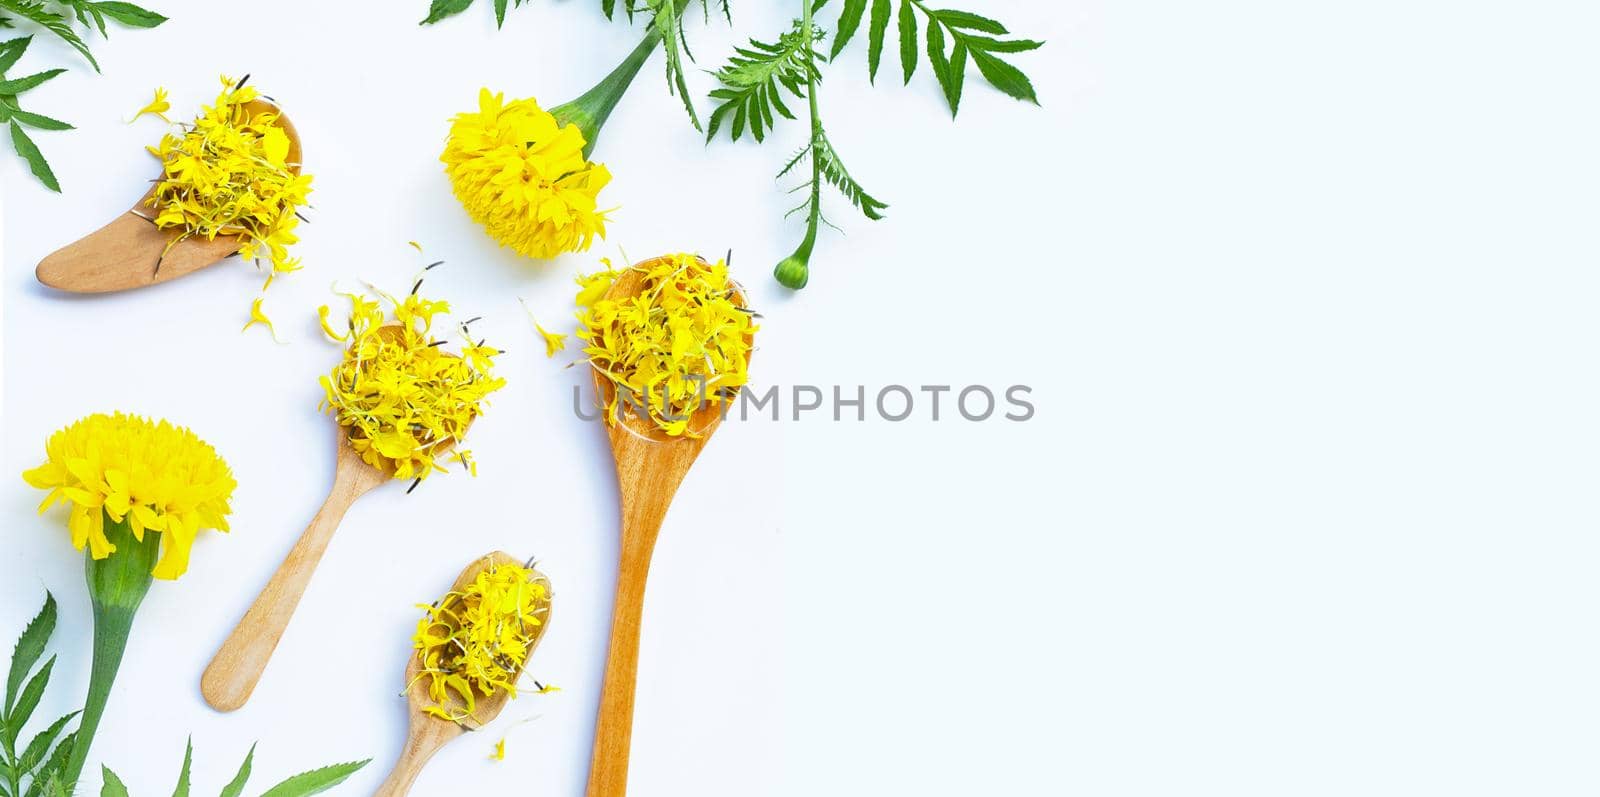 Marigold flower on white background. by Bowonpat